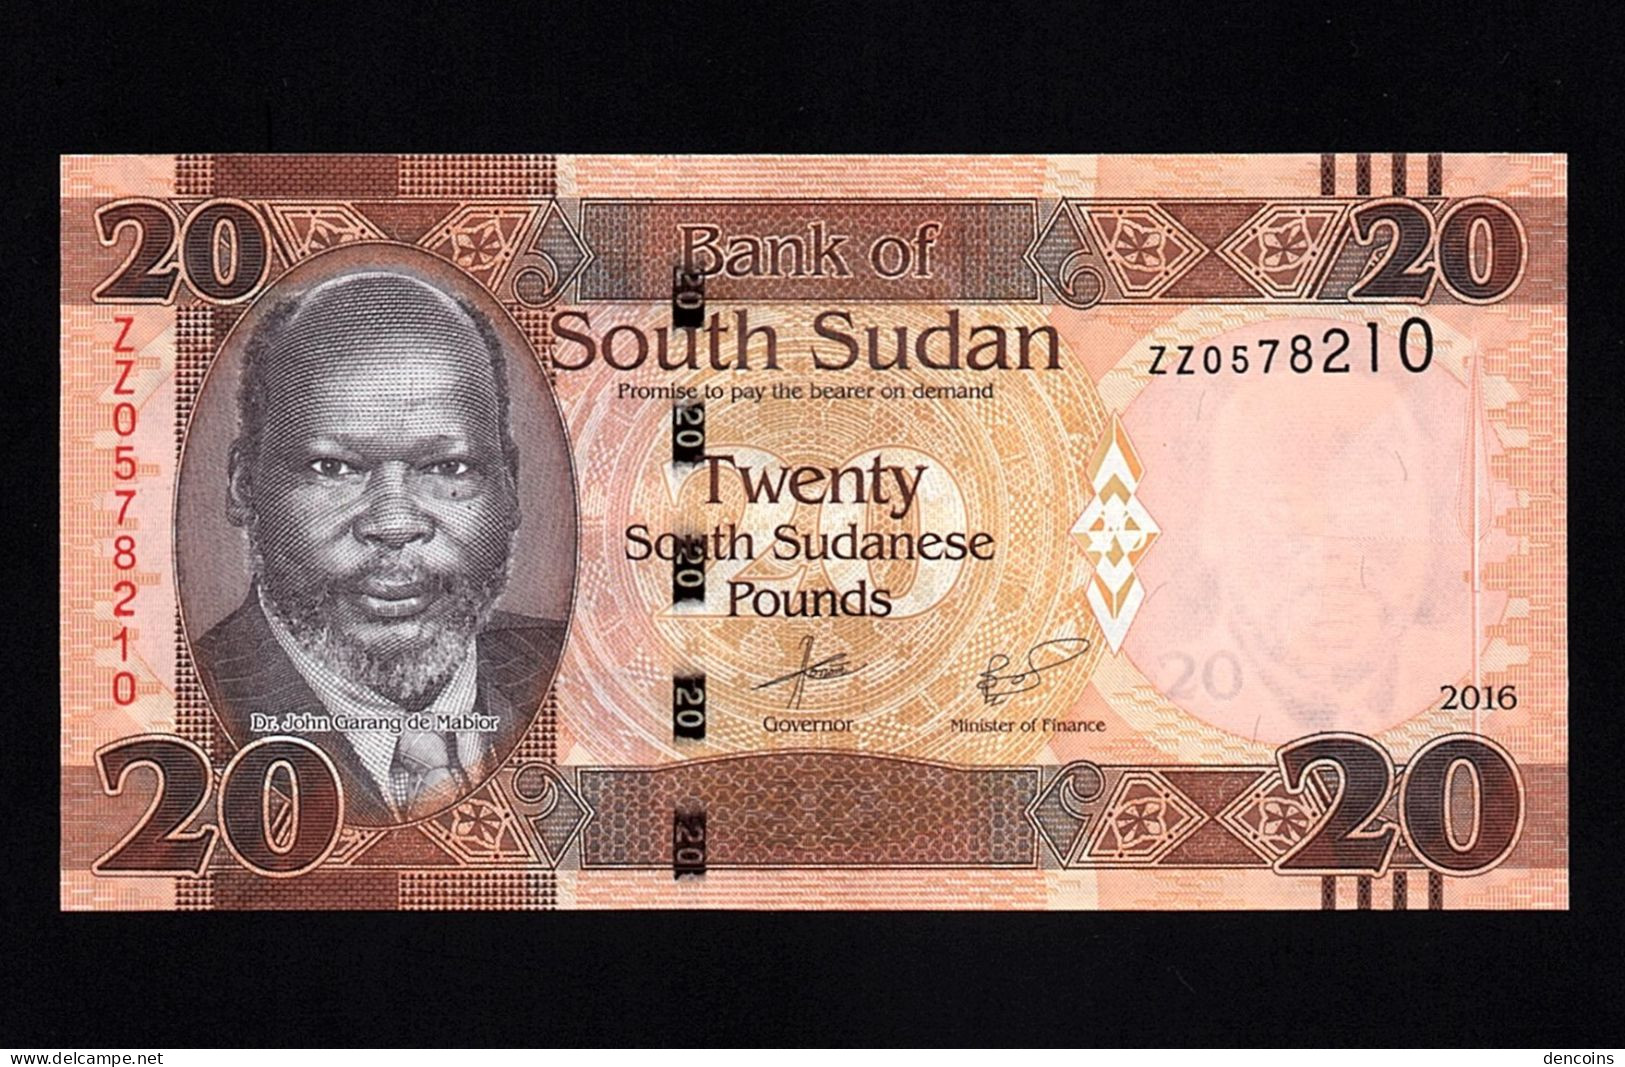 SOUTH SUDAN  P-13b  20 POUNDS  2016  -ZZ-  REPLACEMENT  UNC  NEUF  SIN CIRCULAR - Soudan Du Sud